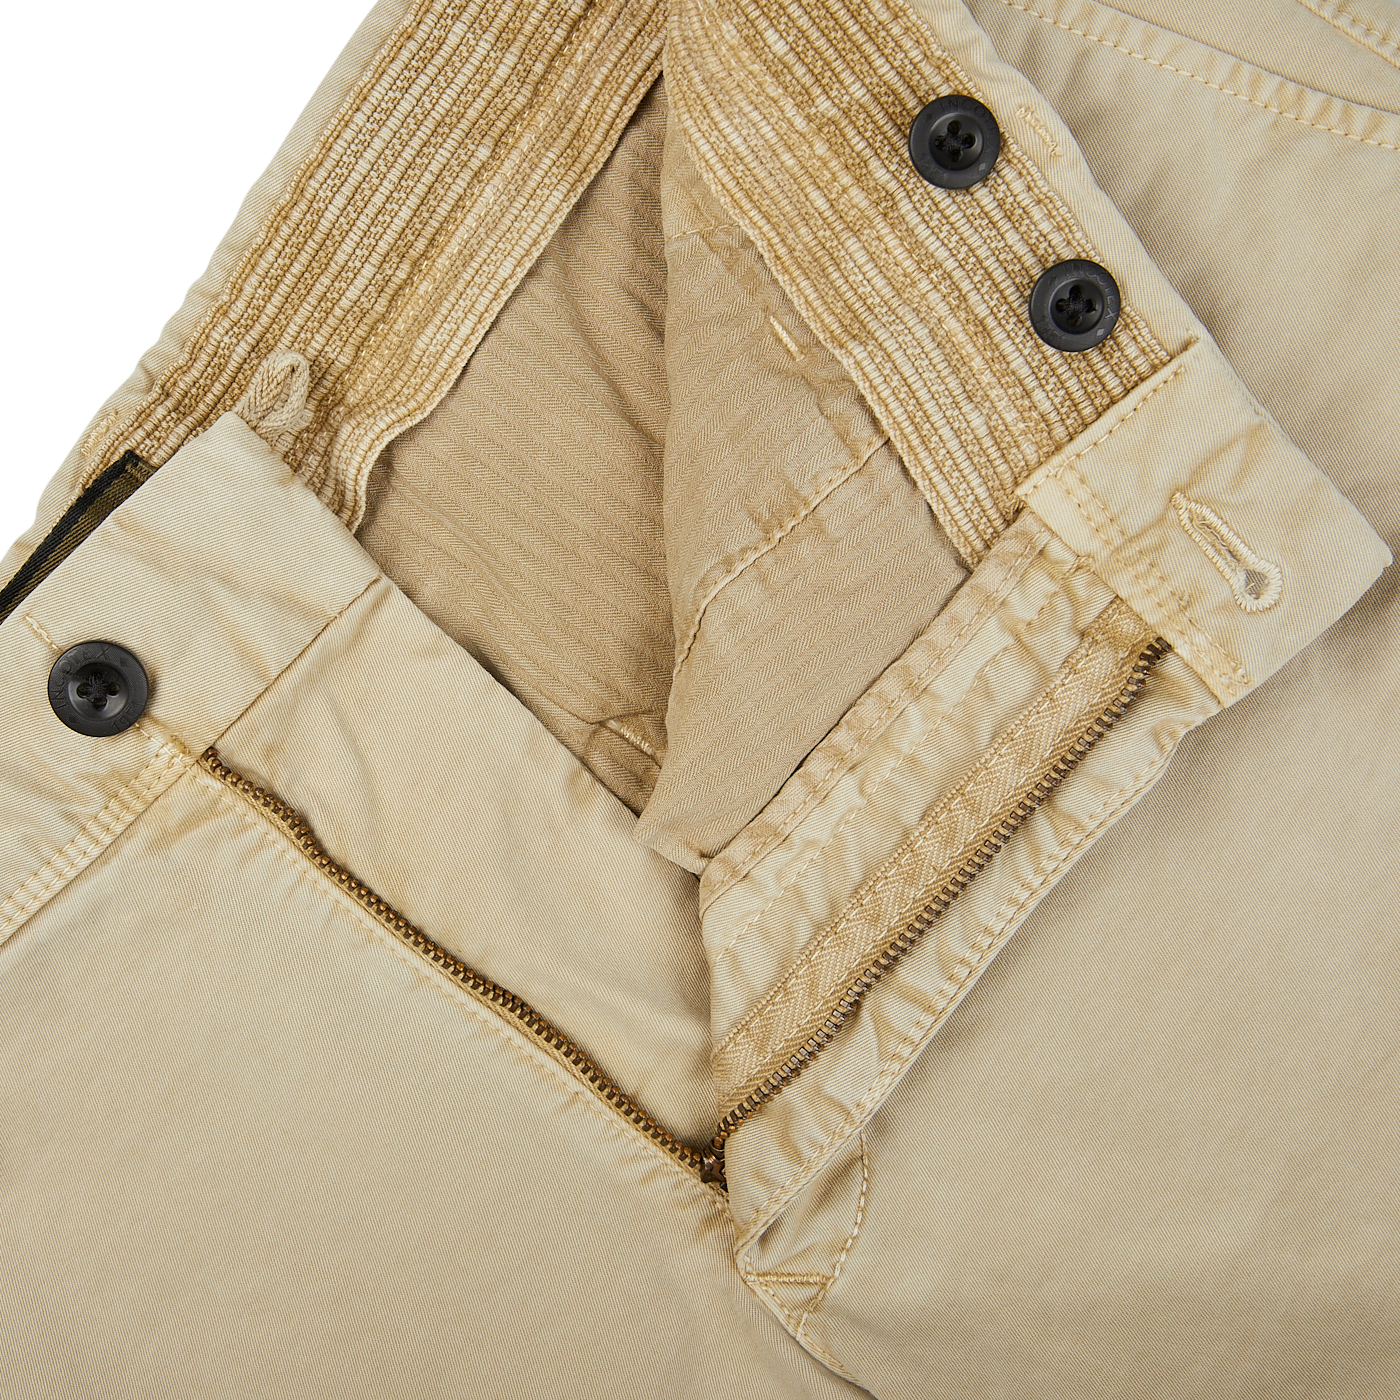 A close up of Light Beige Cotton Stretch Slacks Chinos by Incotex.